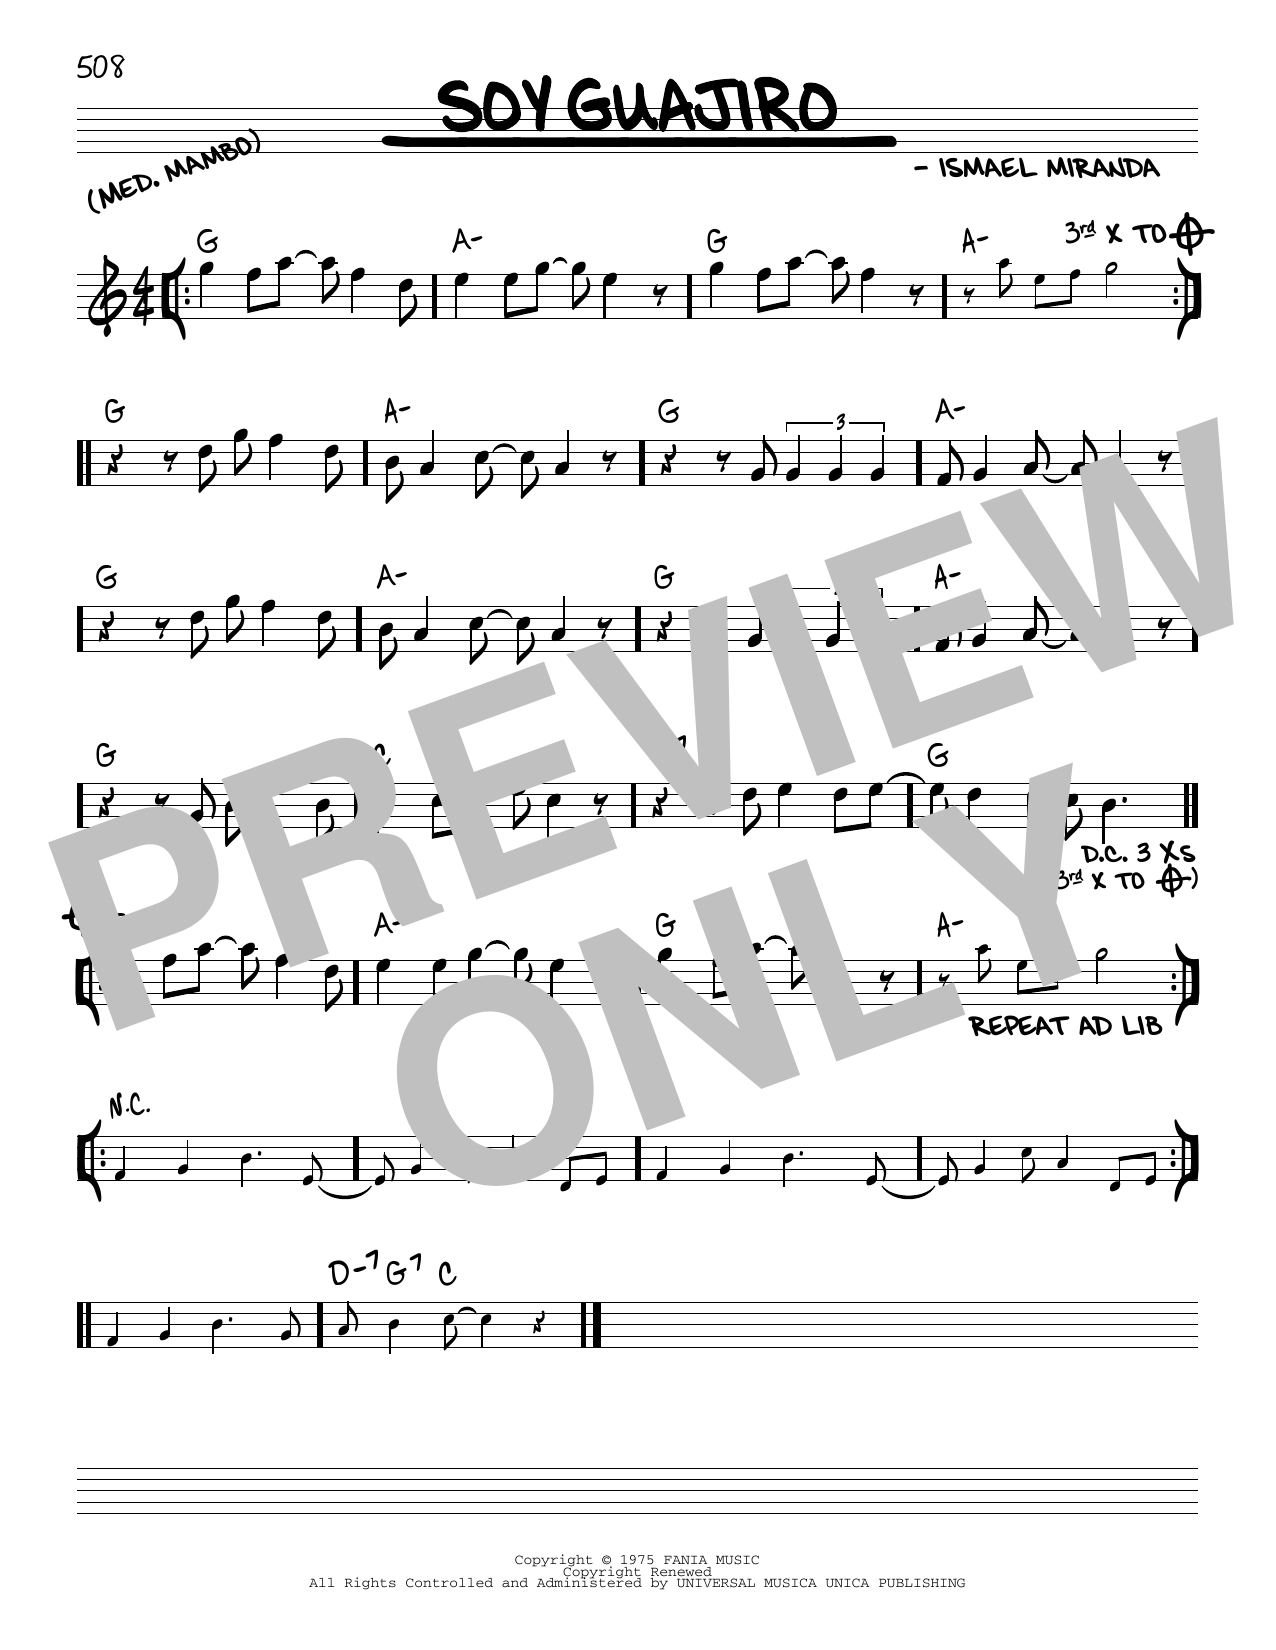 Ismael Miranda Soy Guajiro Sheet Music Notes & Chords for Real Book – Melody & Chords - Download or Print PDF